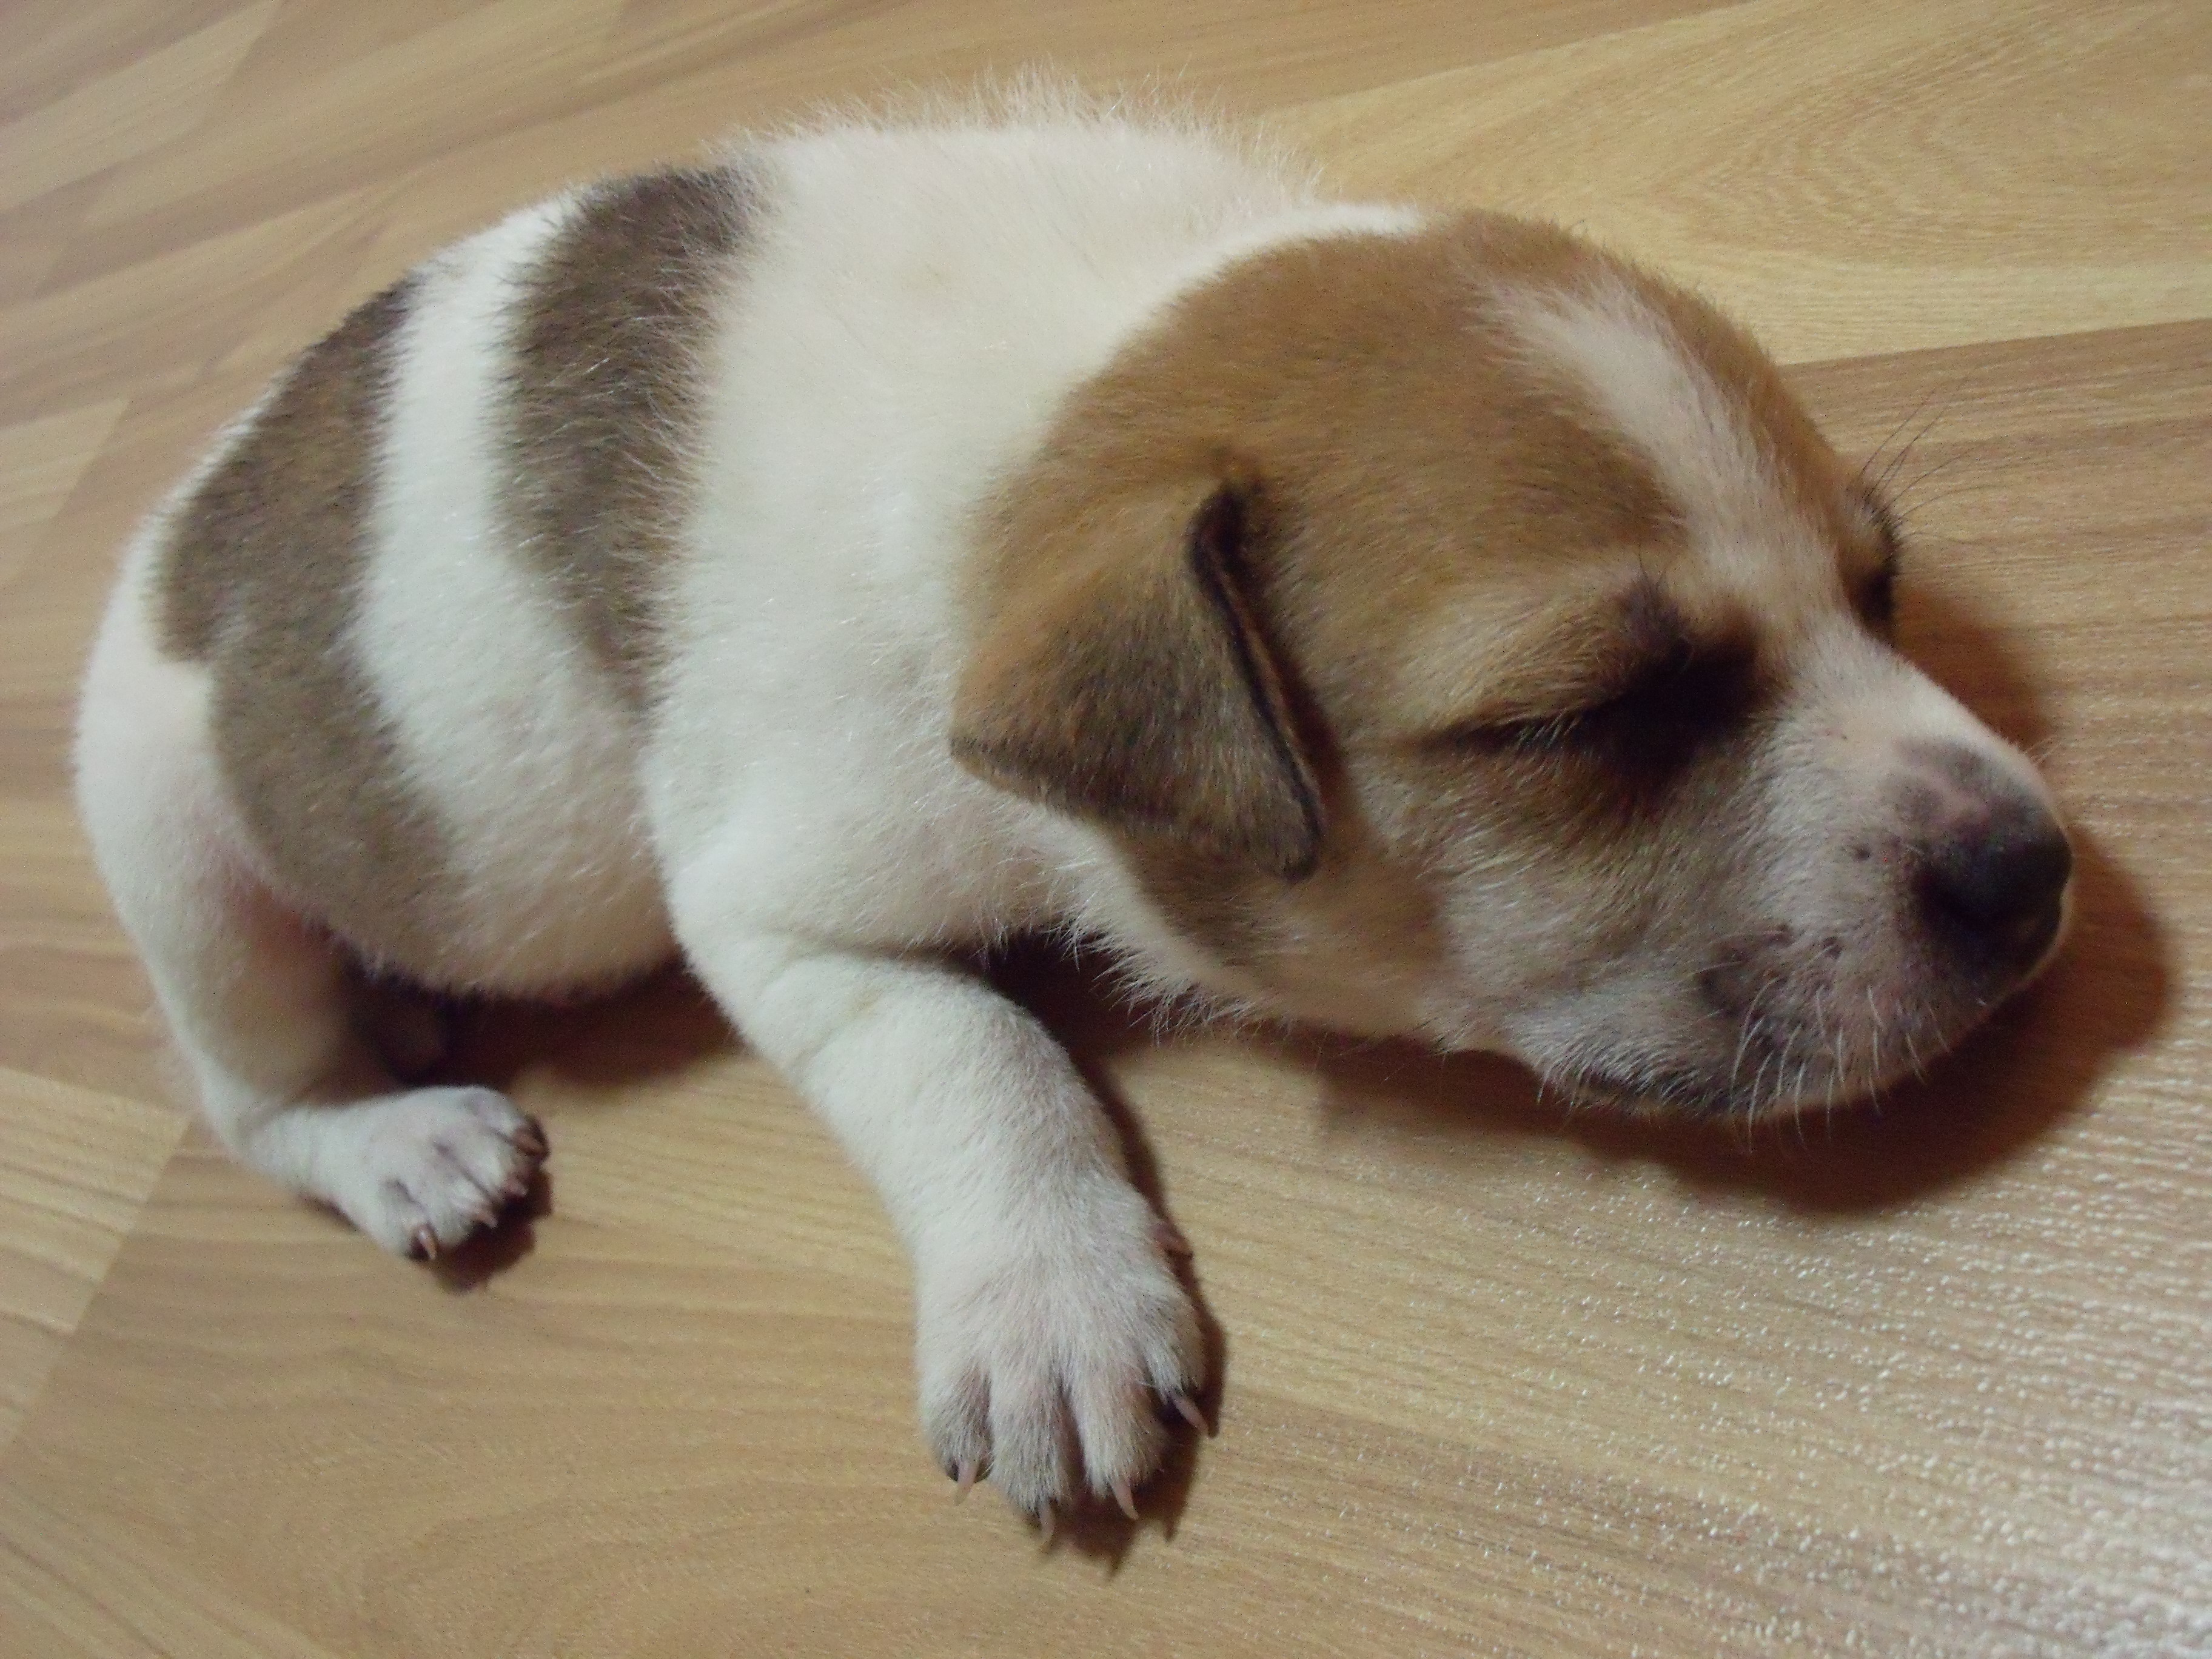 File:Puppy.JPG - Wikimedia Commons